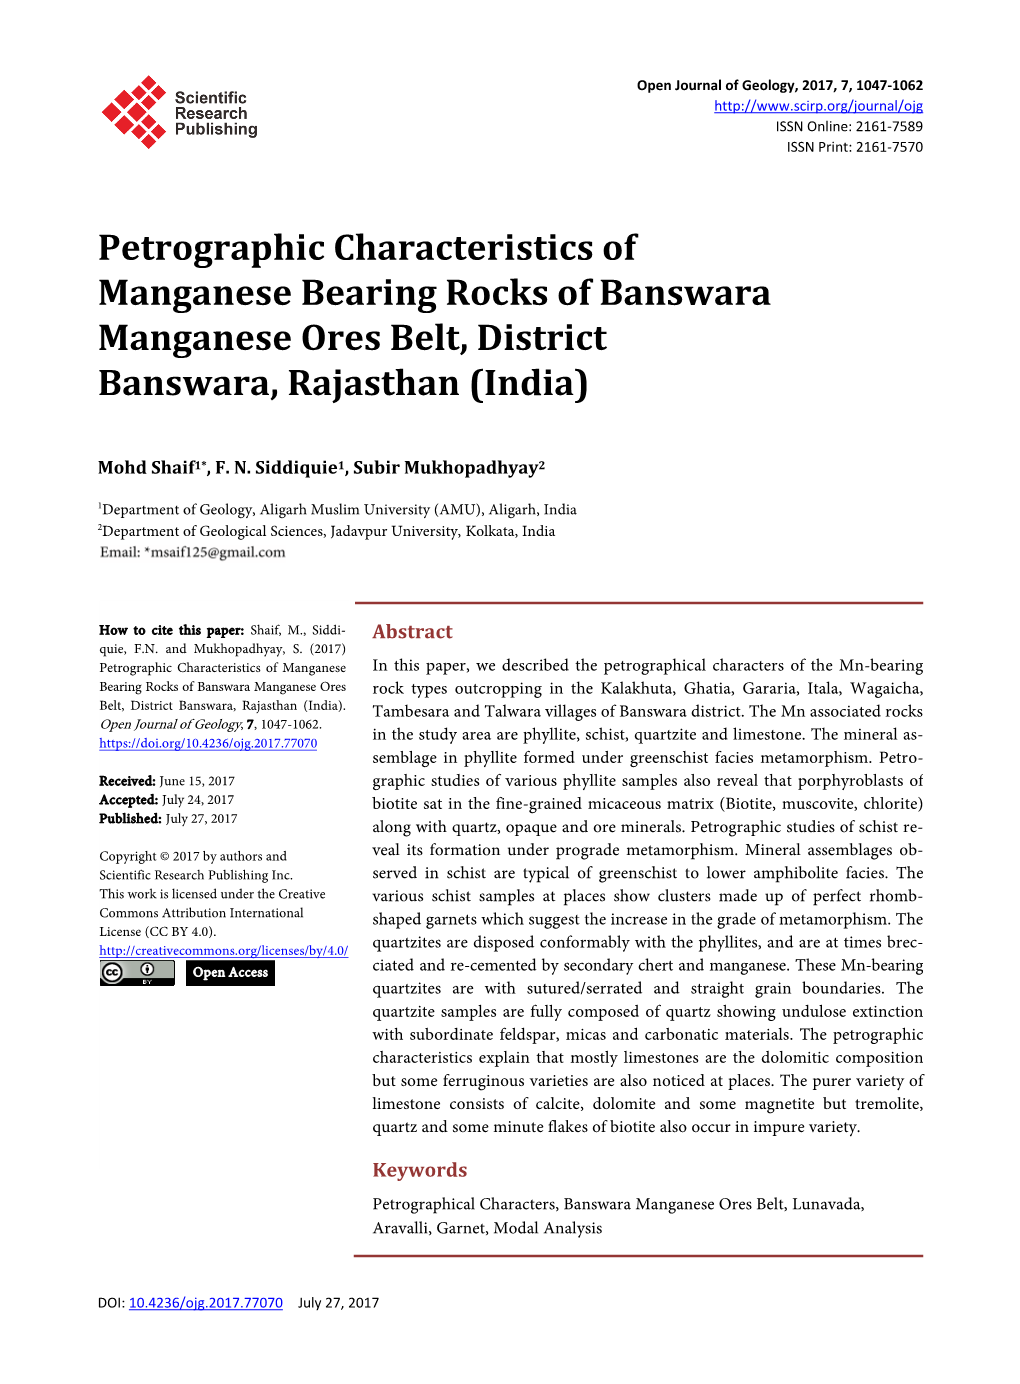 Petrographic Characteristics of Manganese Bearing Rocks of Banswara Manganese Ores Belt, District Banswara, Rajasthan (India)